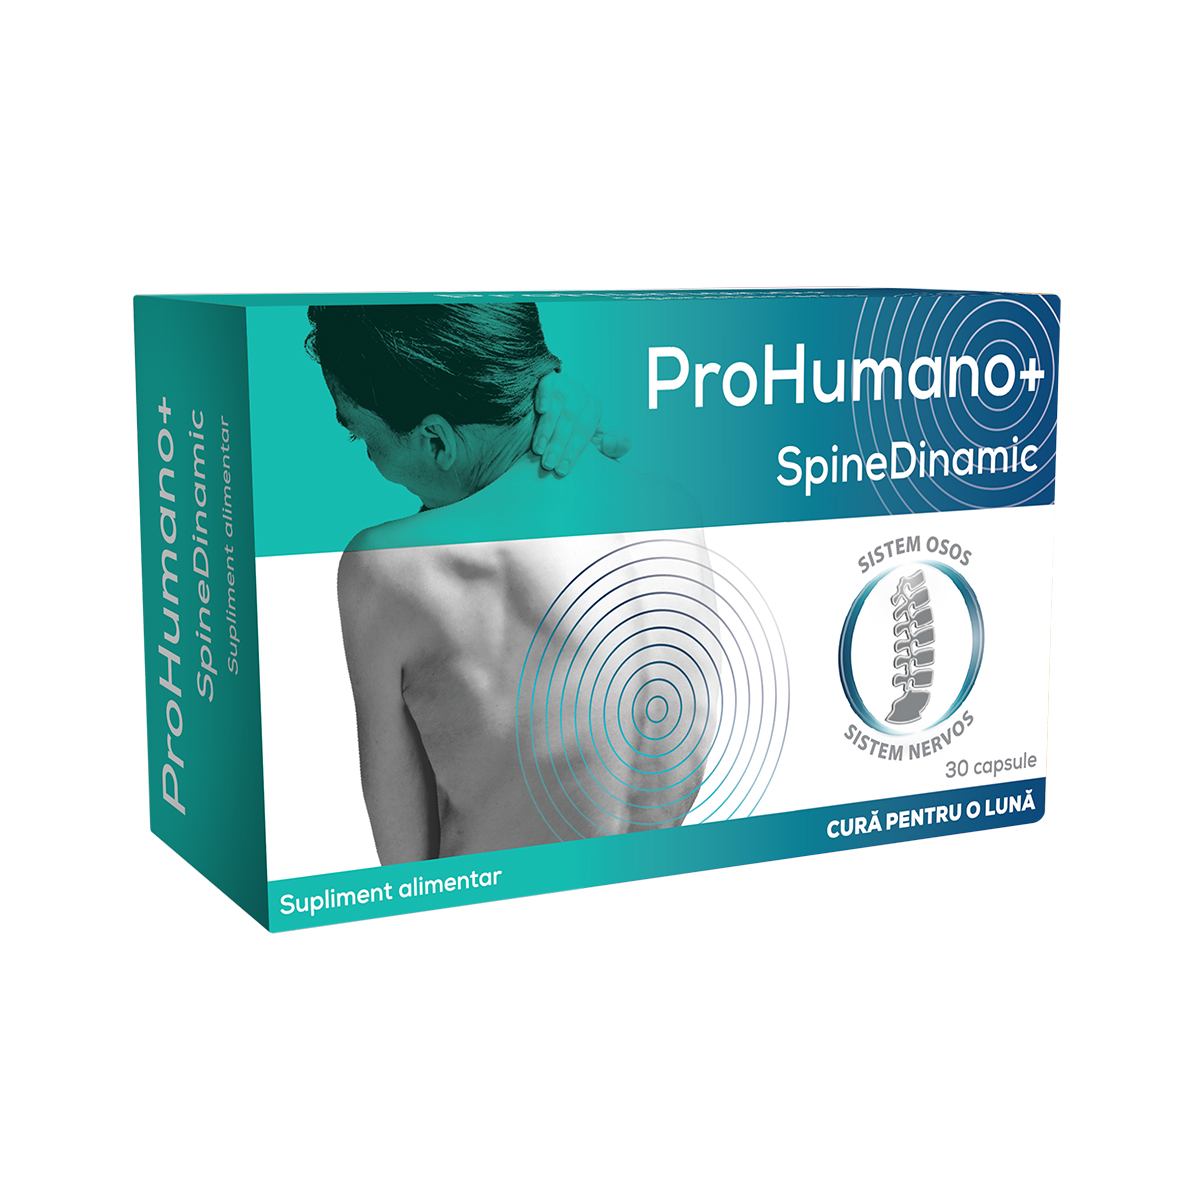 ProHumano+ Spinedinamic, 30 capsule, Pharmalinea